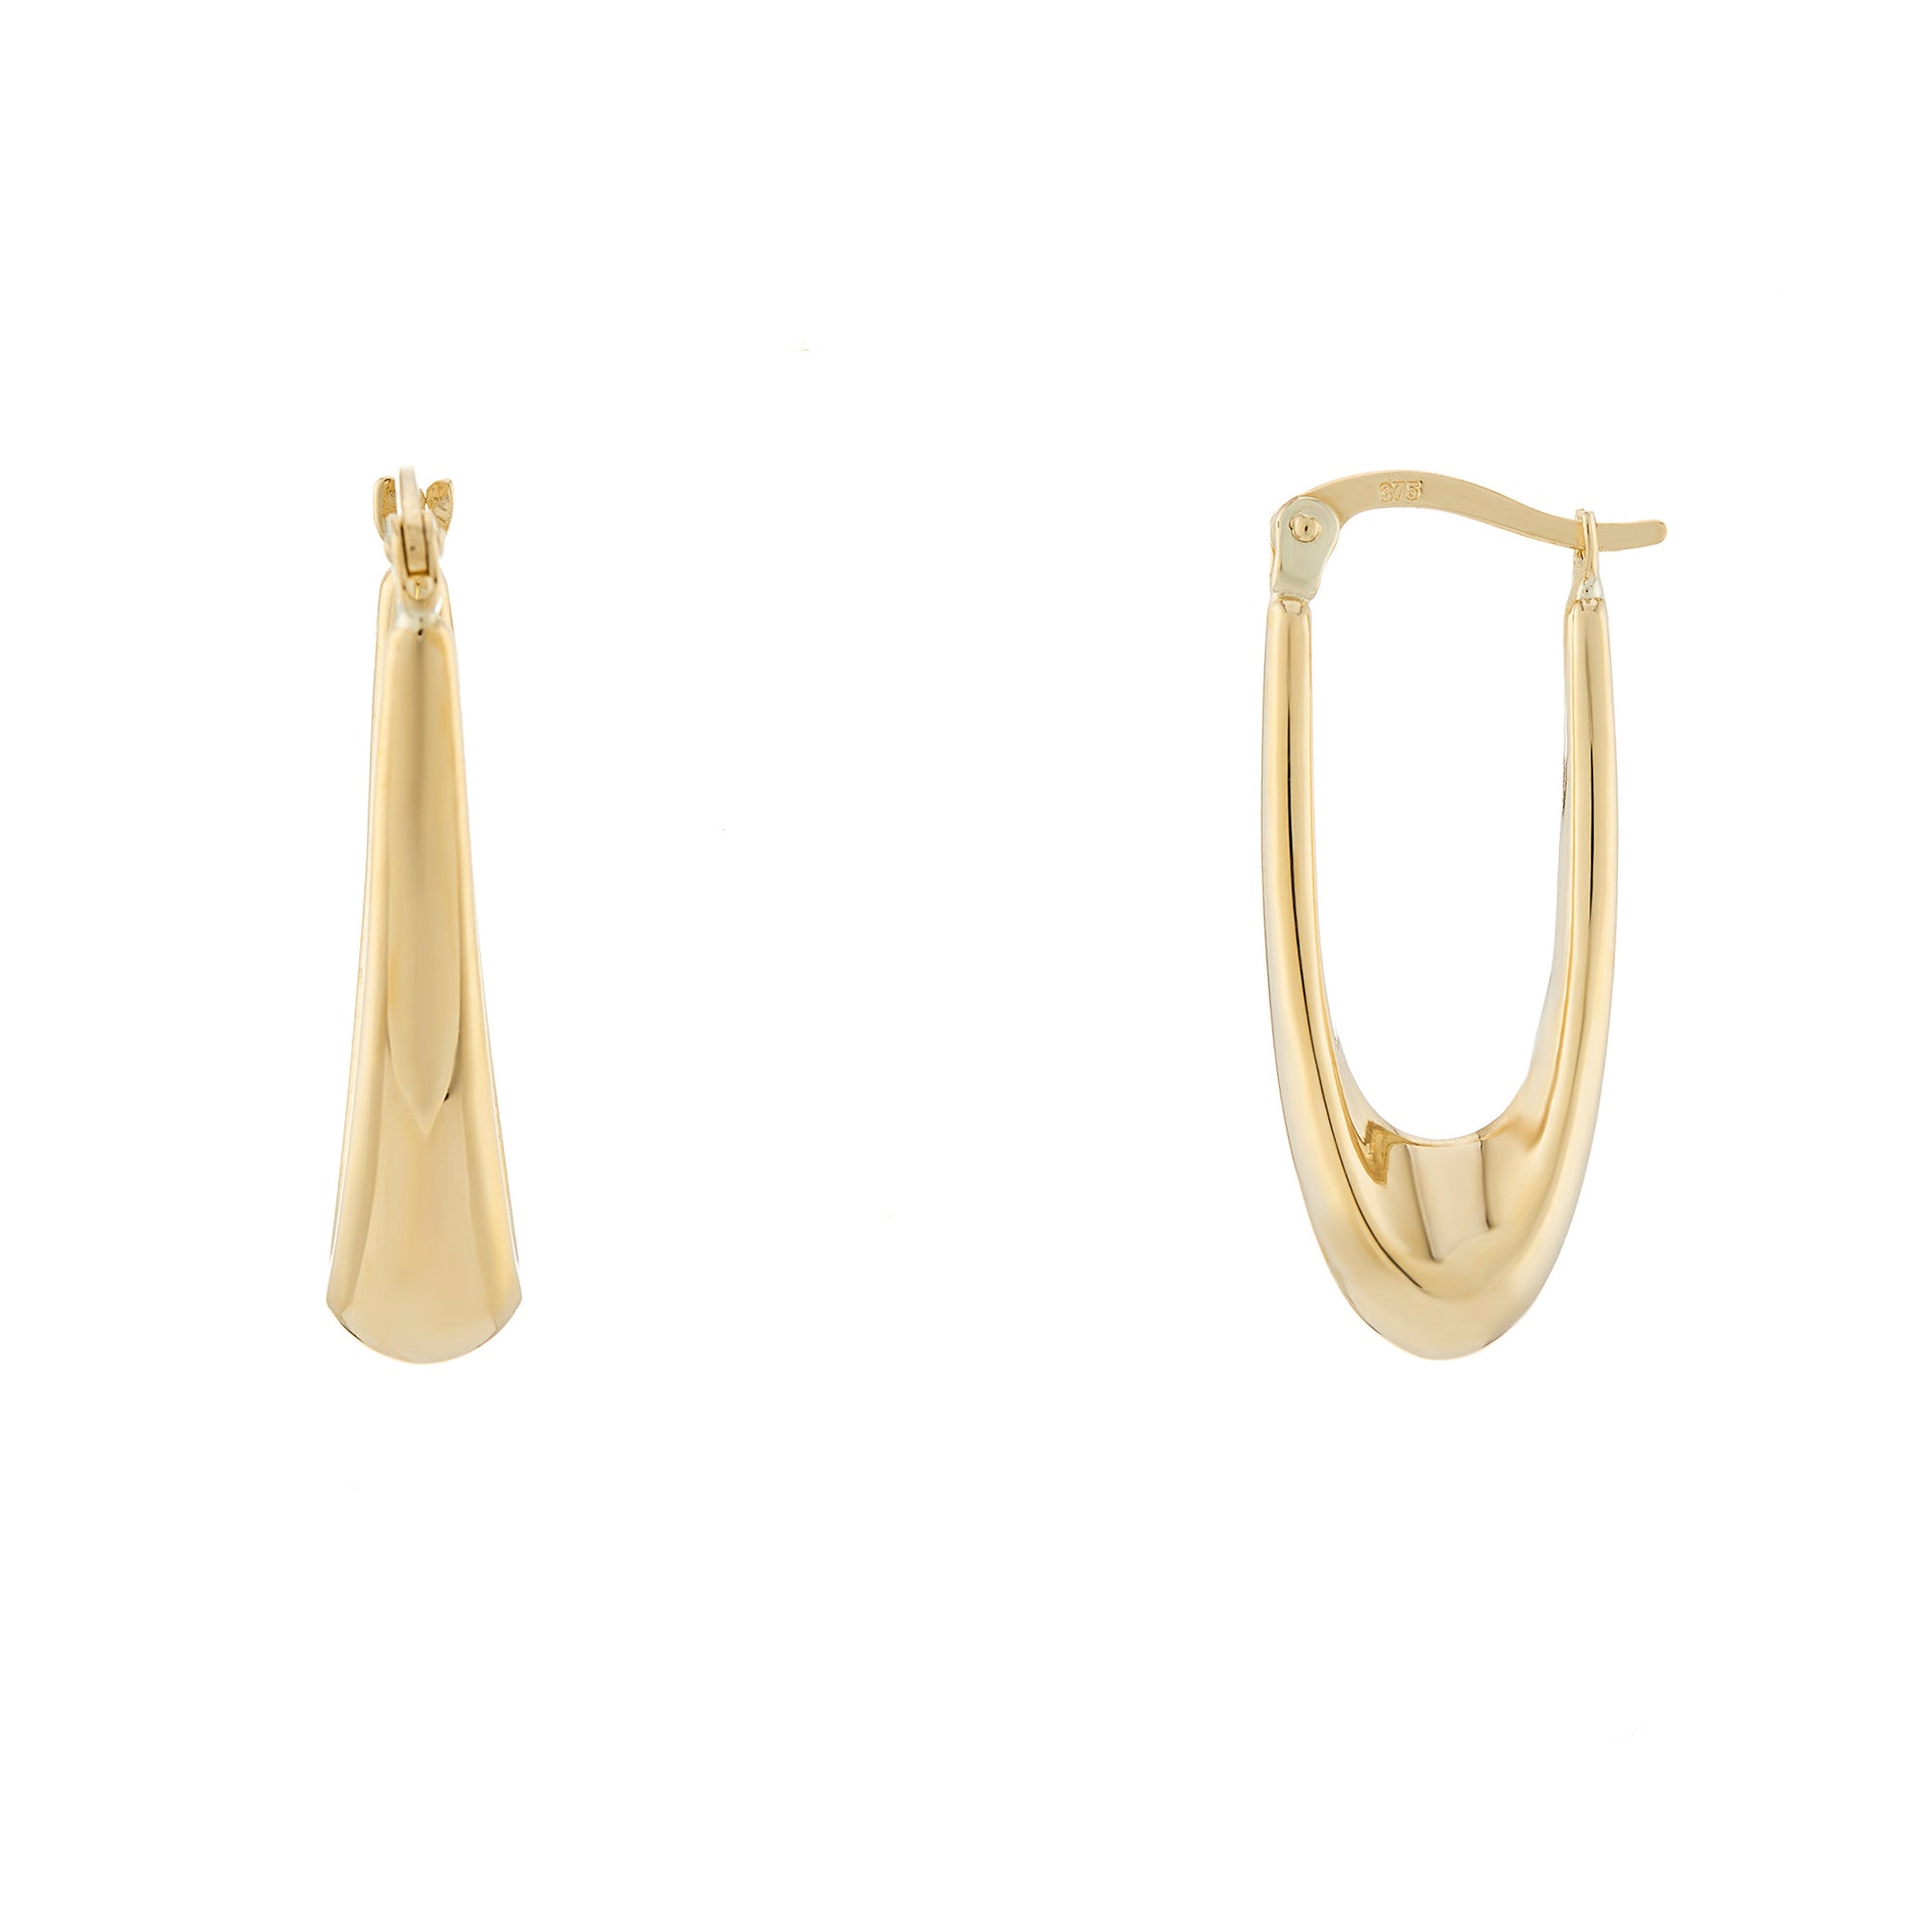 9ct gold plain oval creole hoop earrings